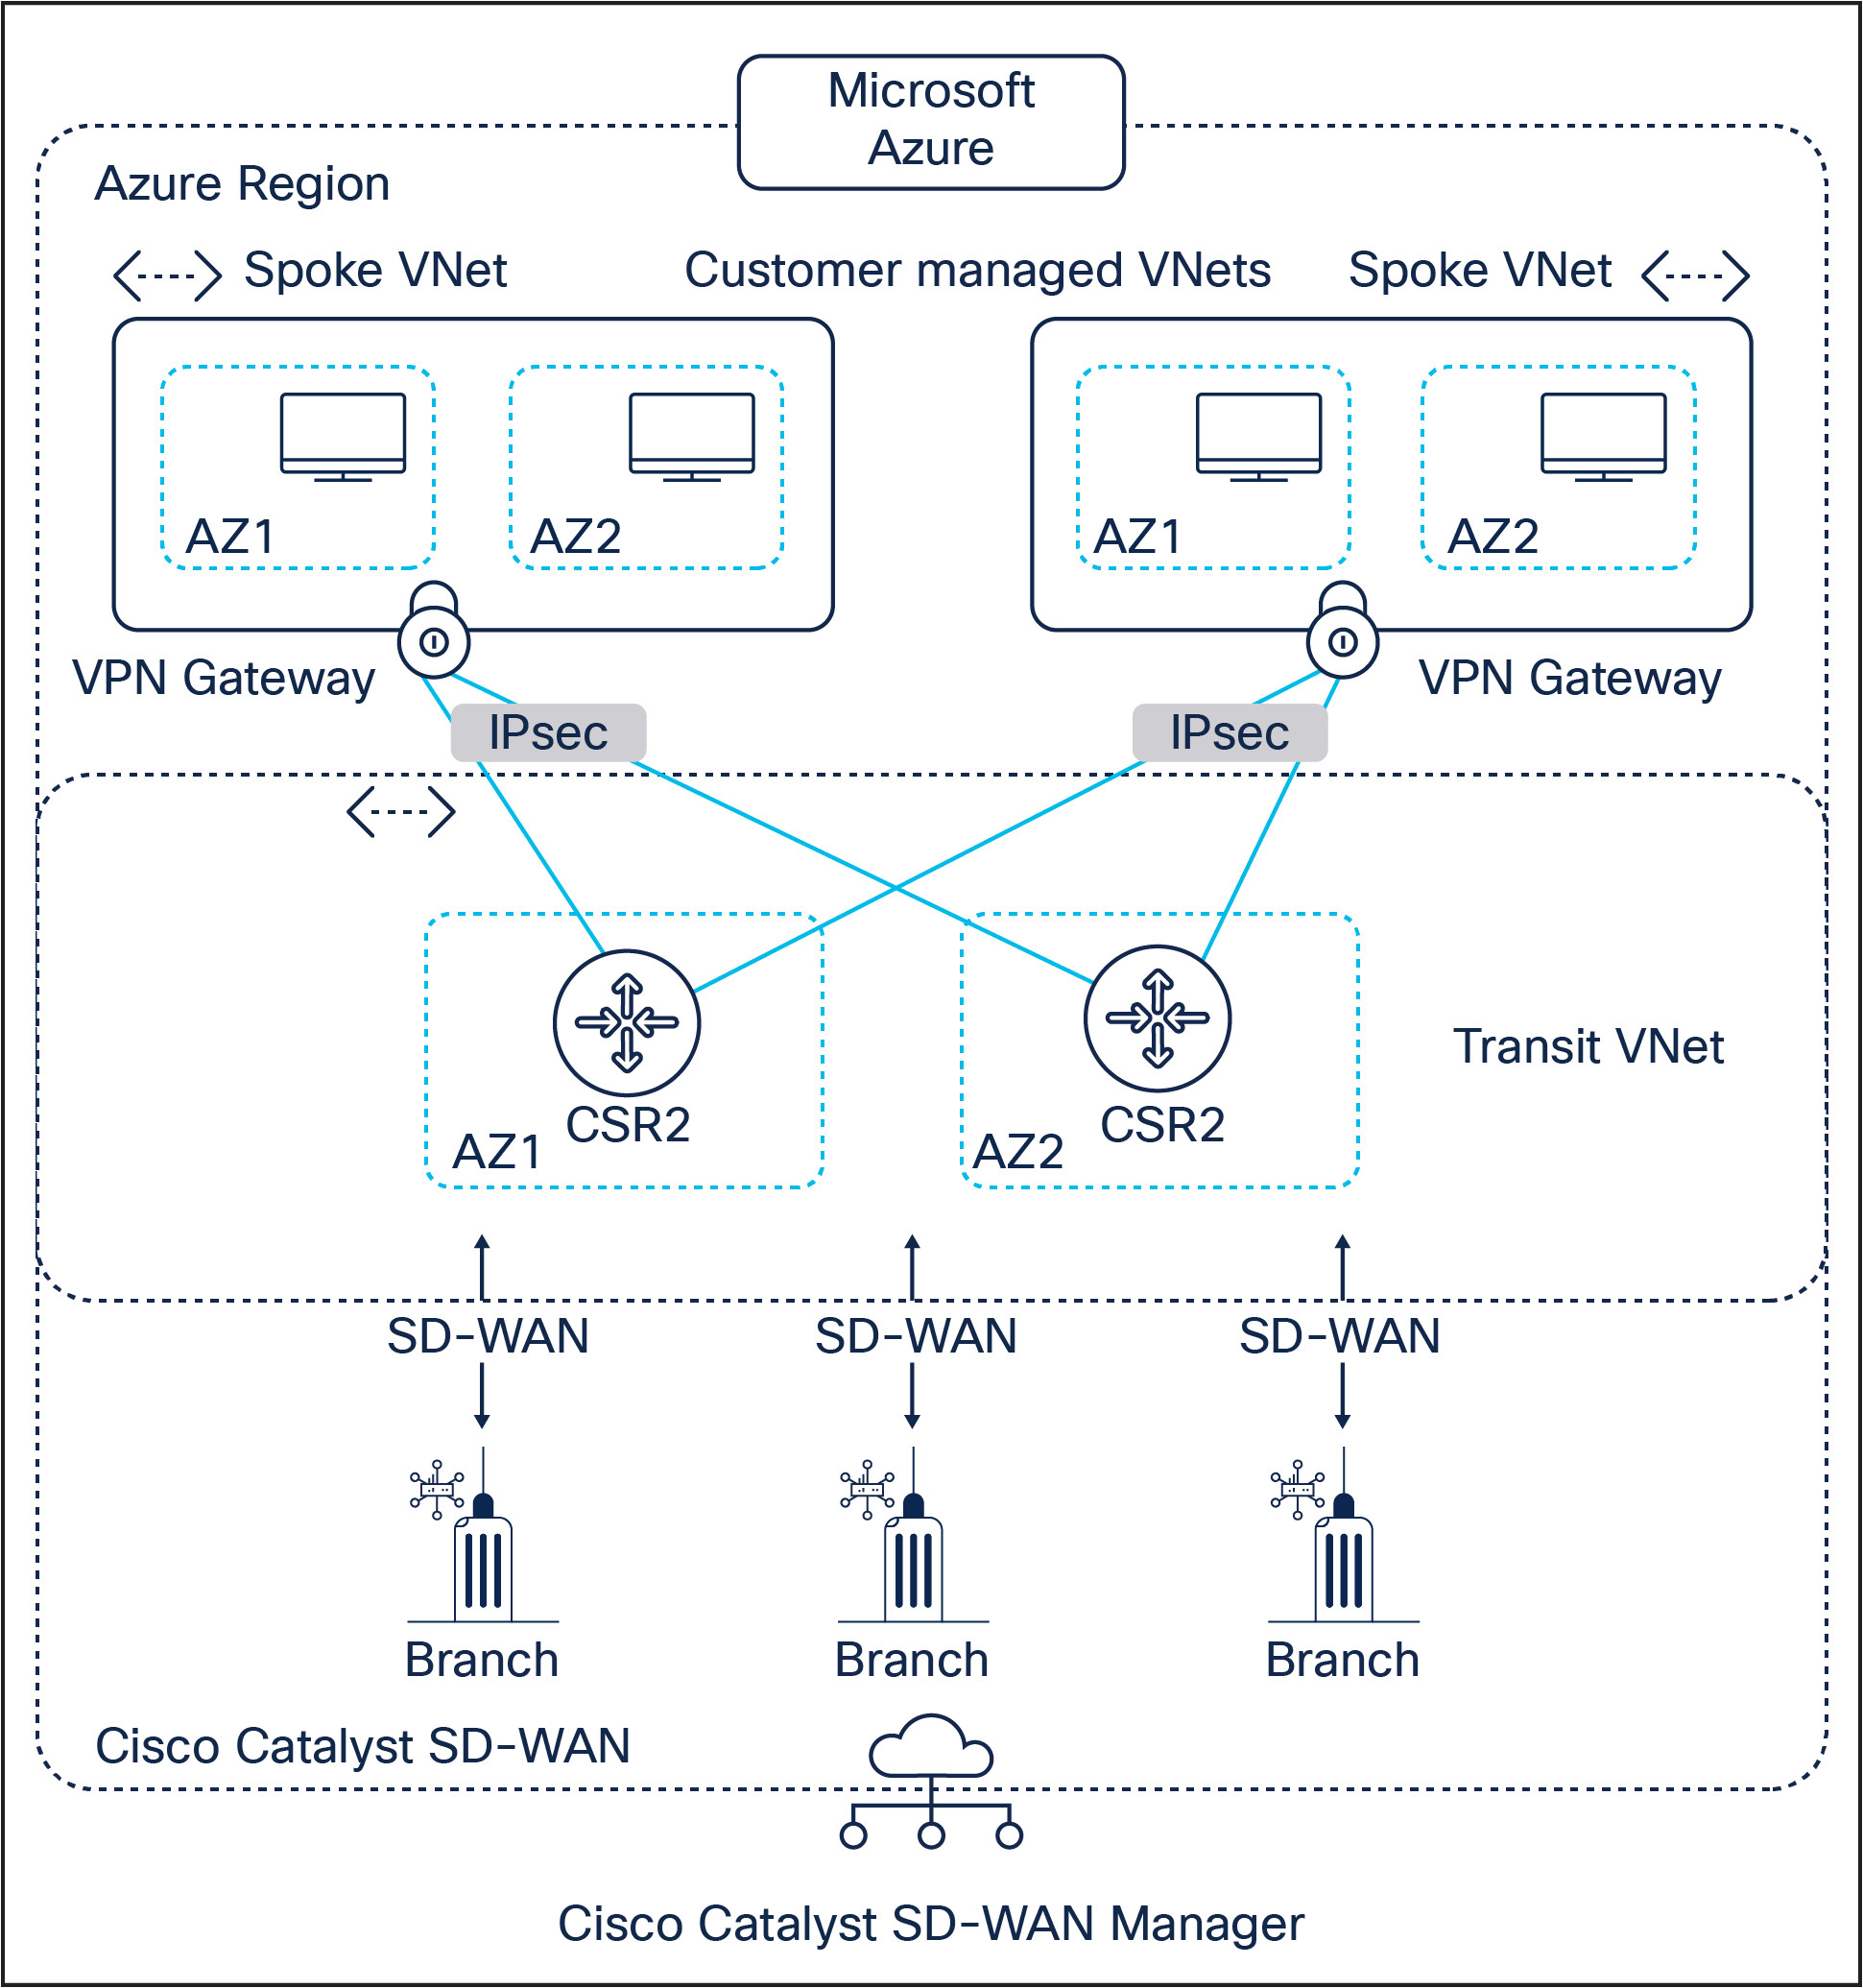 Cisco Catalyst SD-WAN cloud connectivity using Cloud OnRamp for IaaS